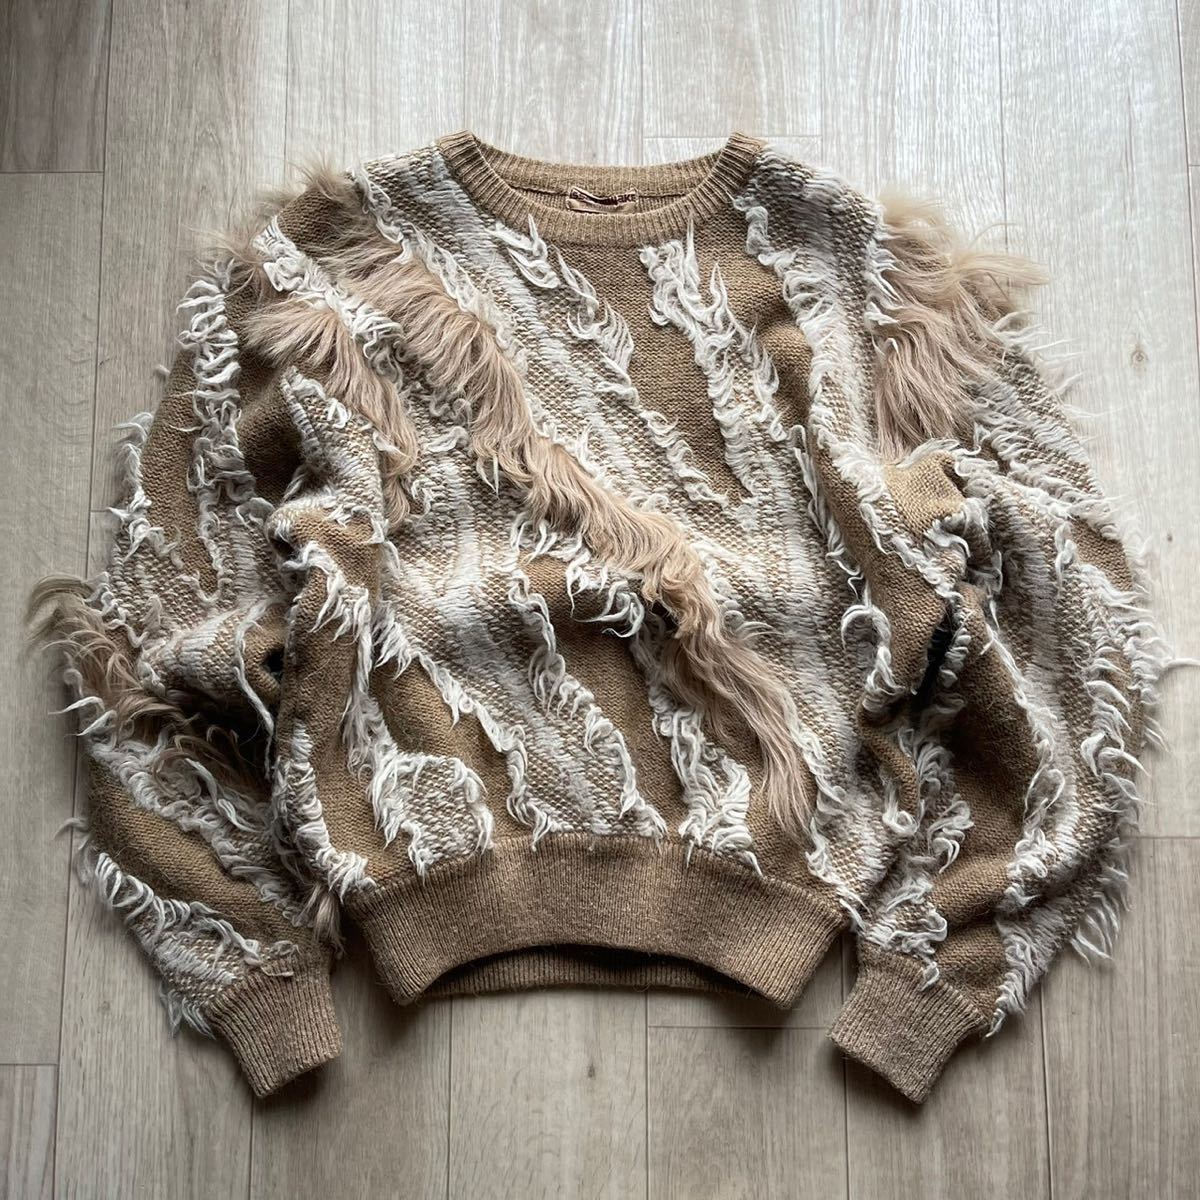 70s ISSEY MIYAKE design fur knit sweater イッセイミヤケ ファー